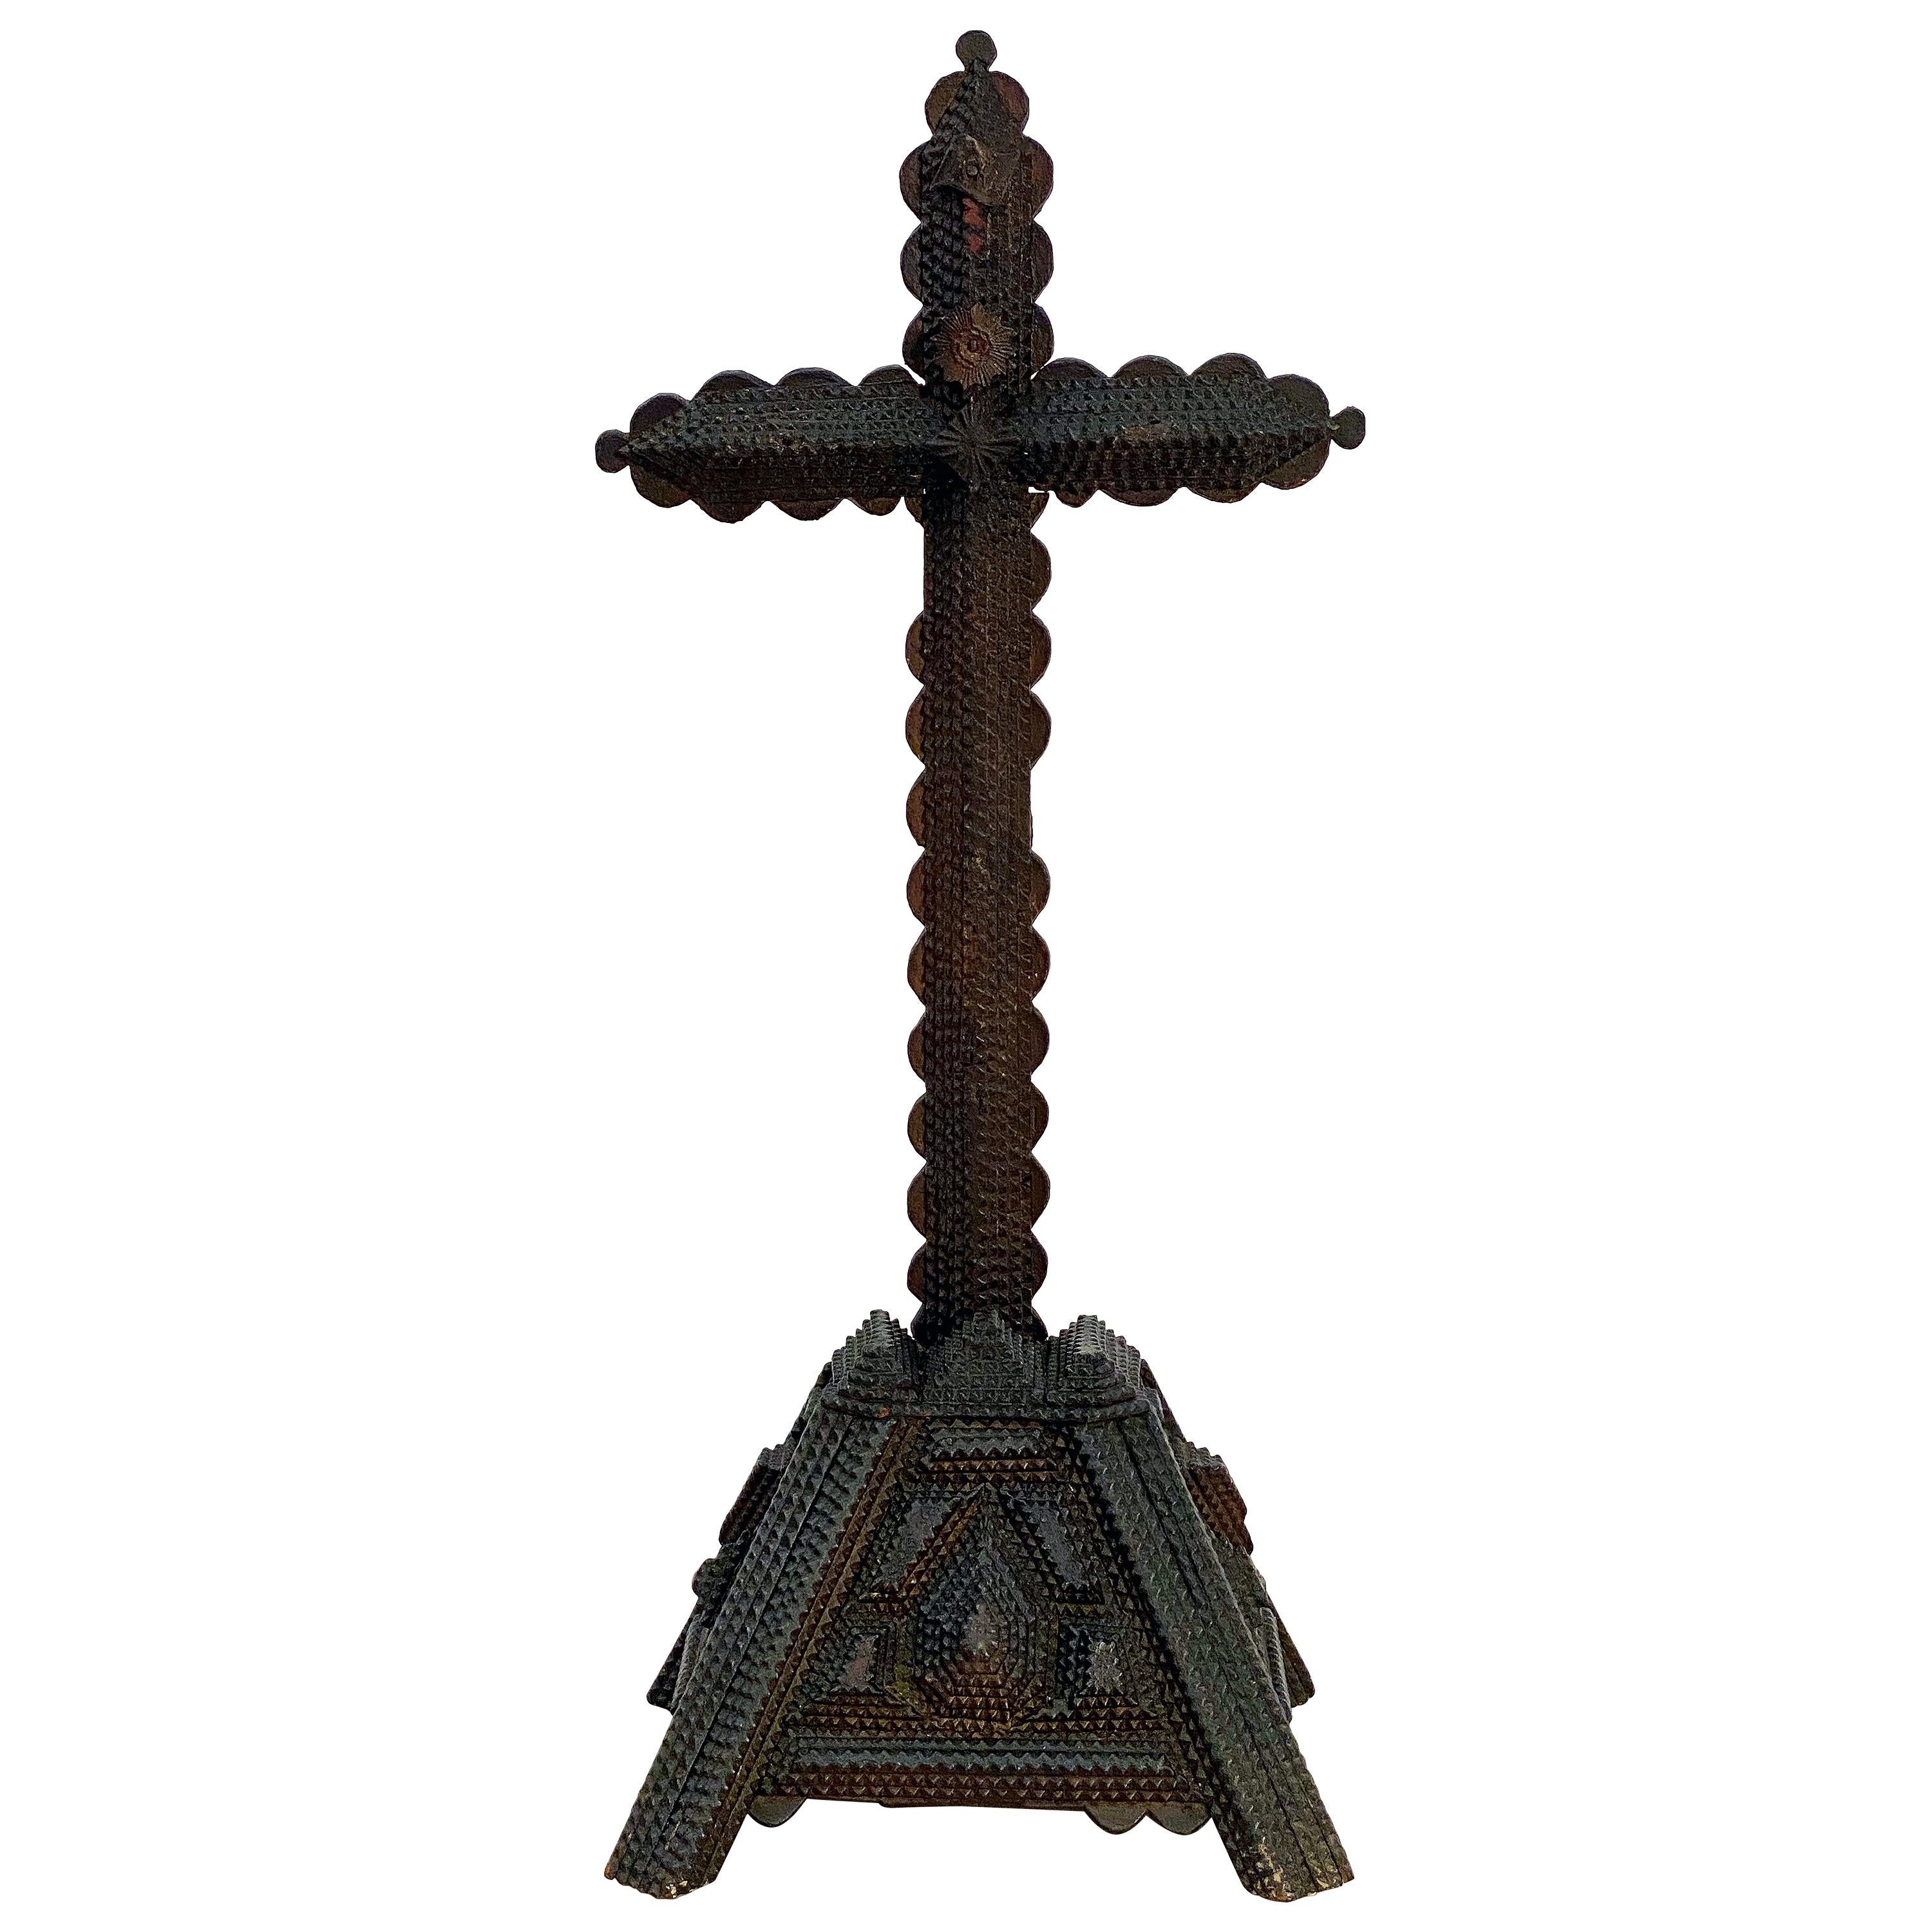 French Tramp Art Cross on Pyramid Base